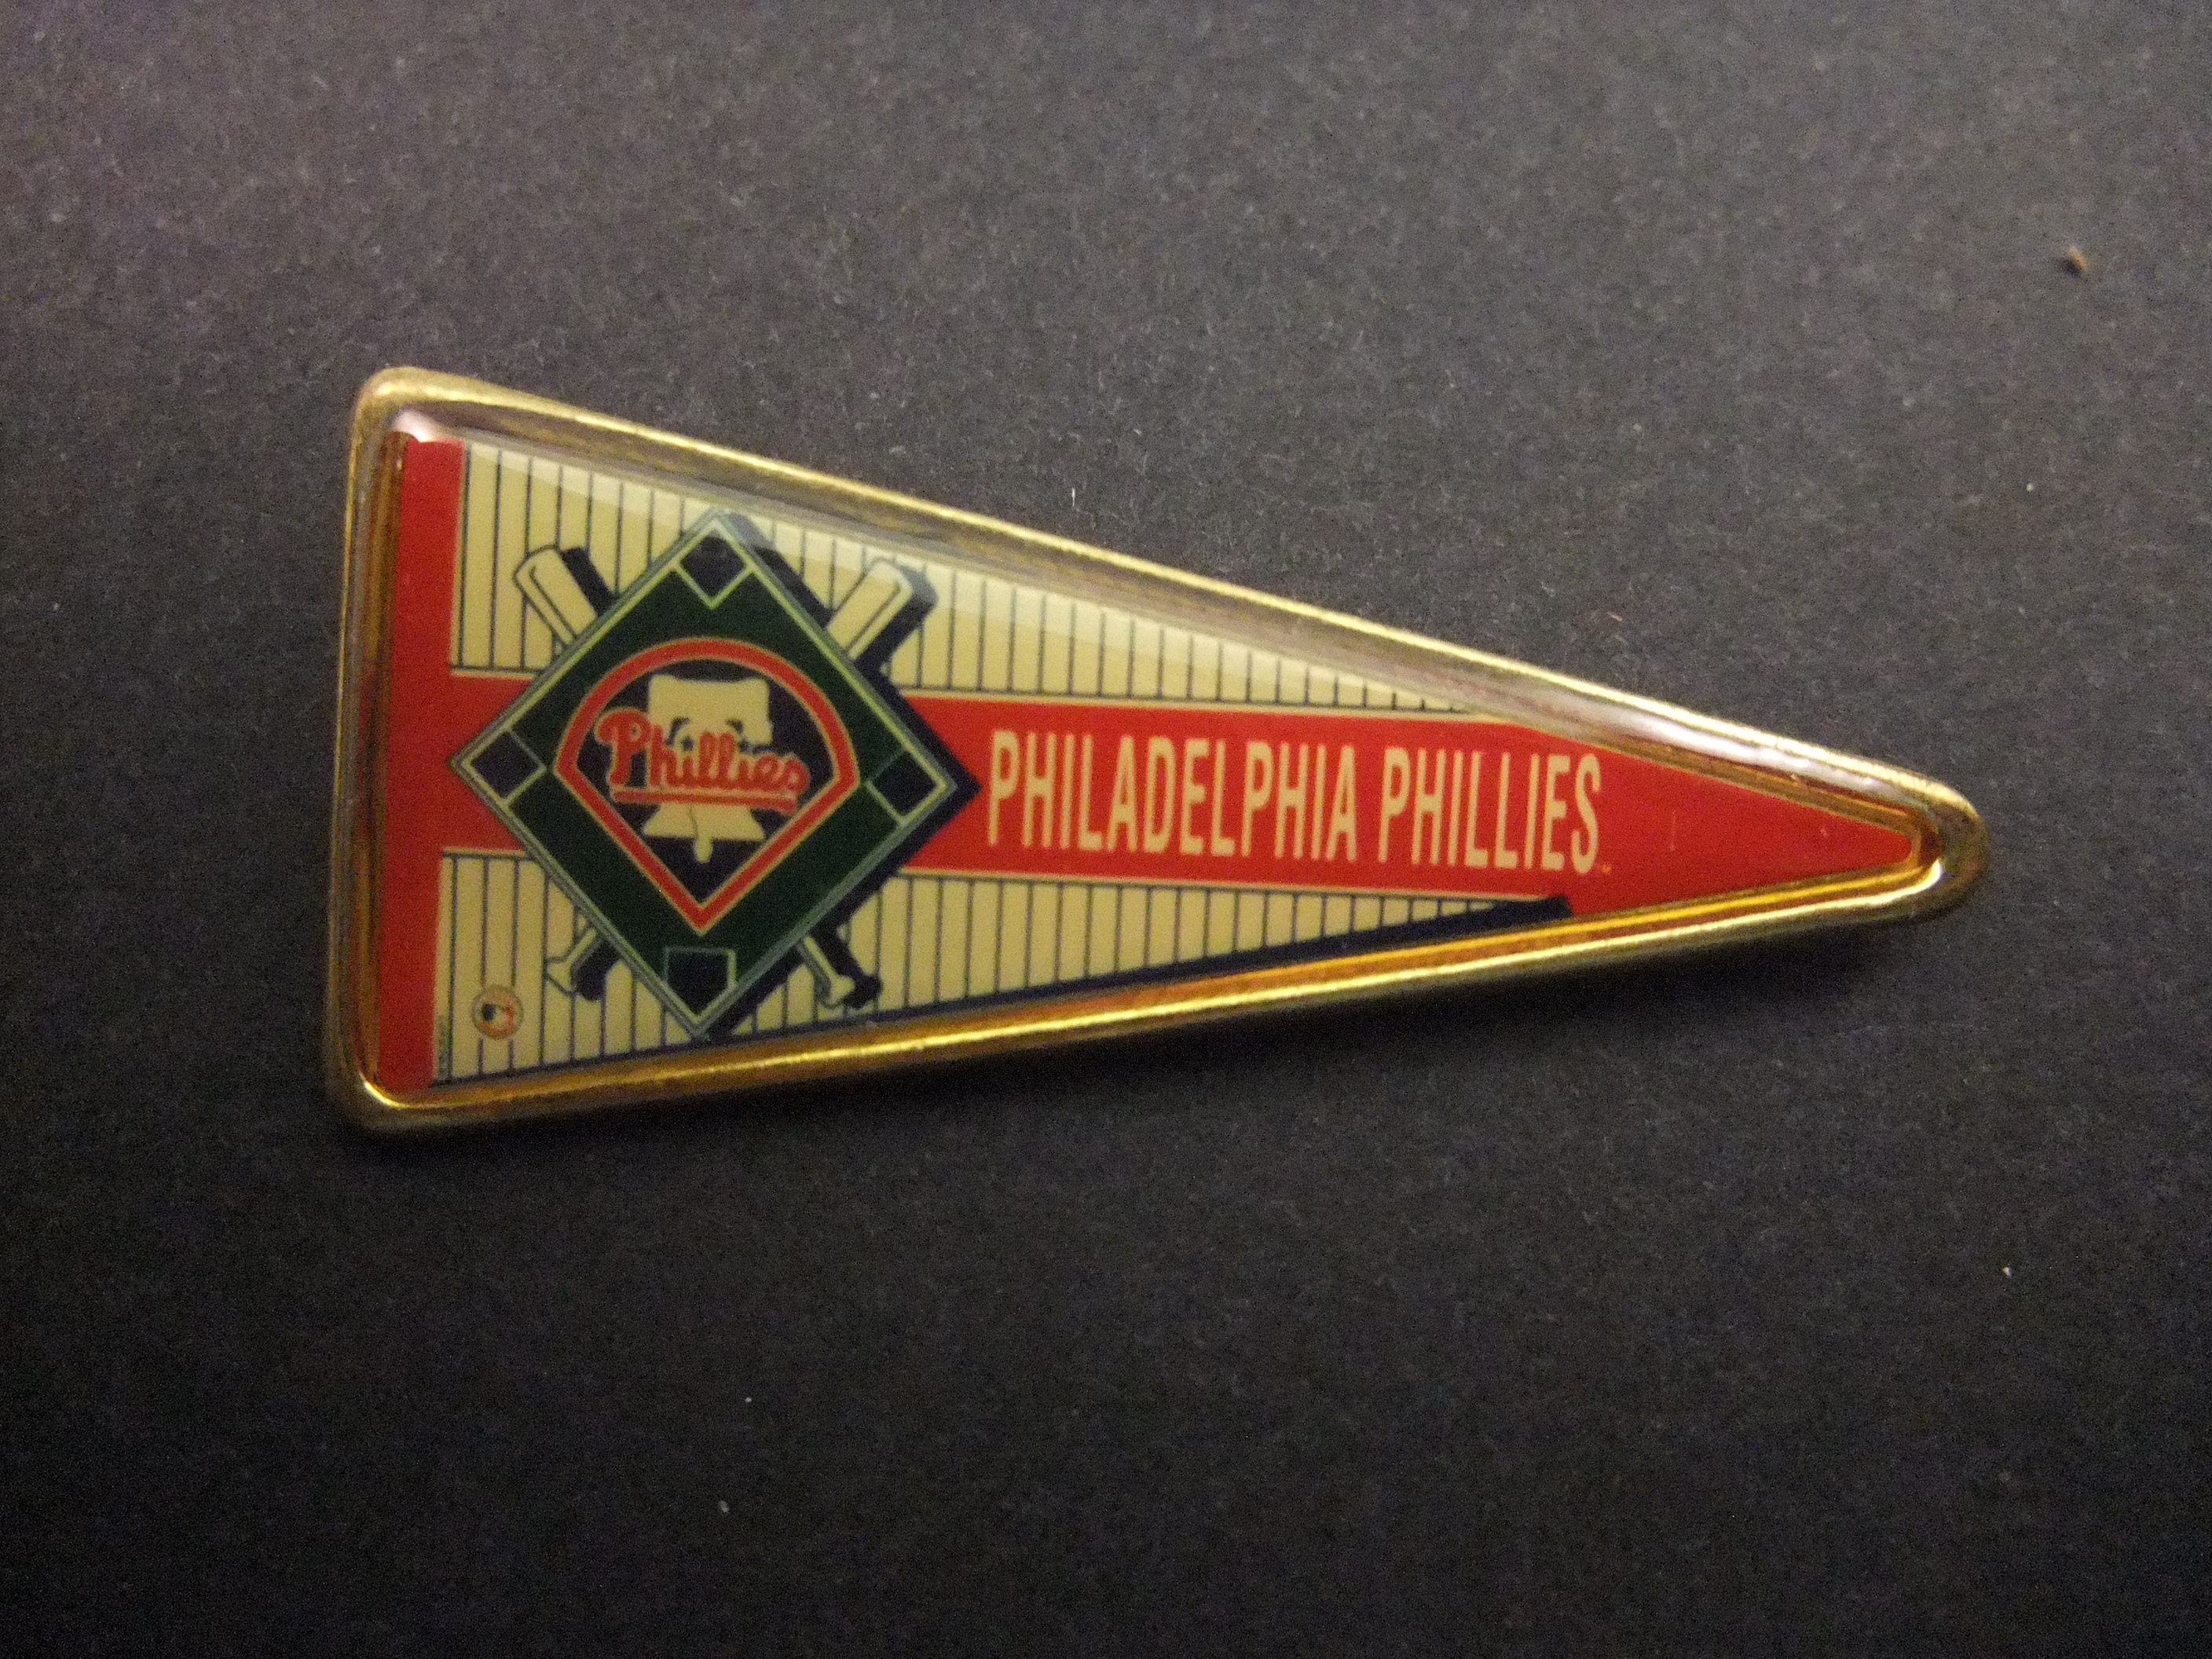 The Philadelphia Phillies major league baseballteam